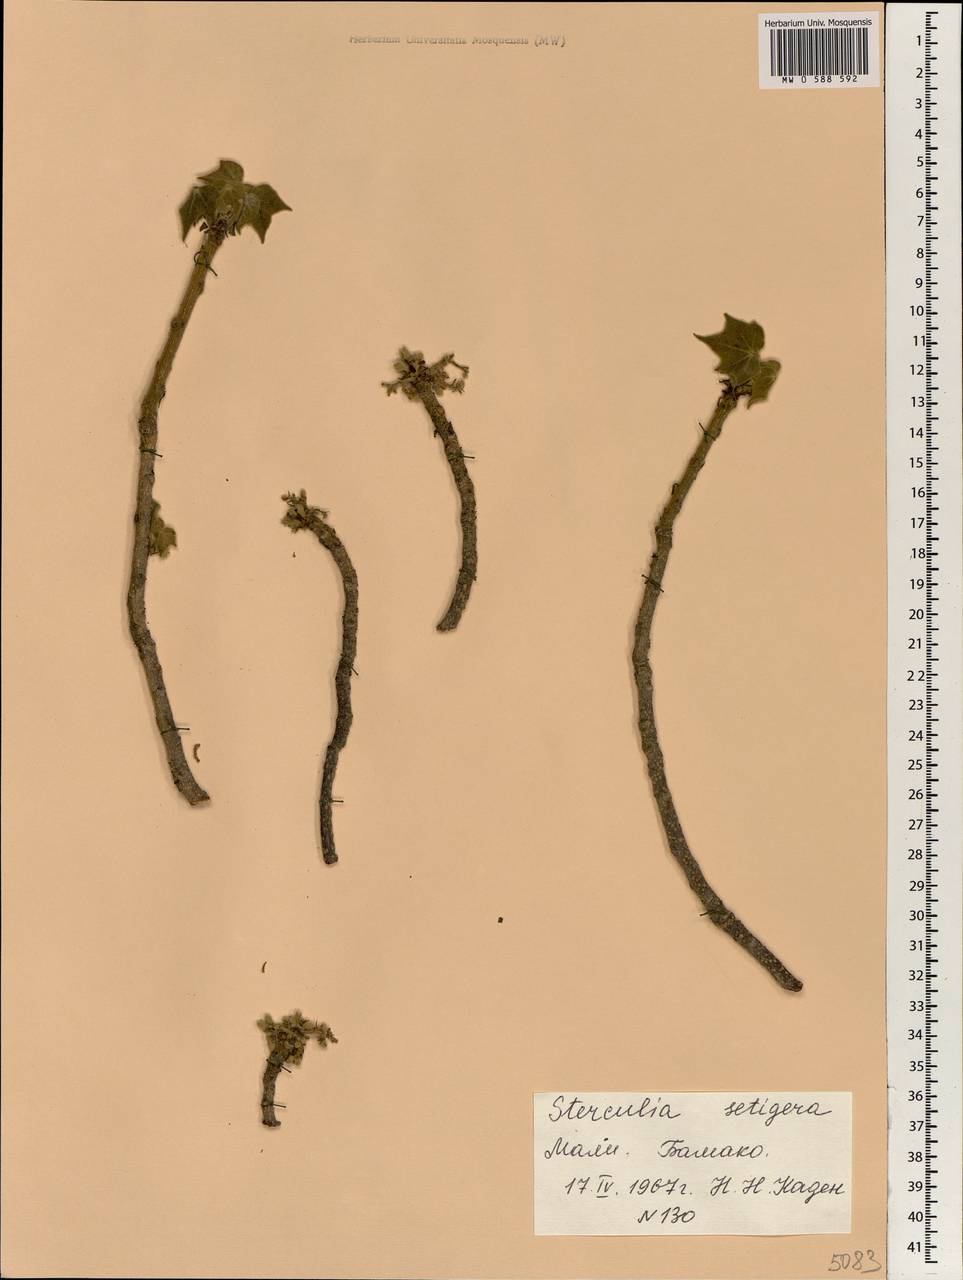 Sterculia setigera Delile, Africa (AFR) (Mali)